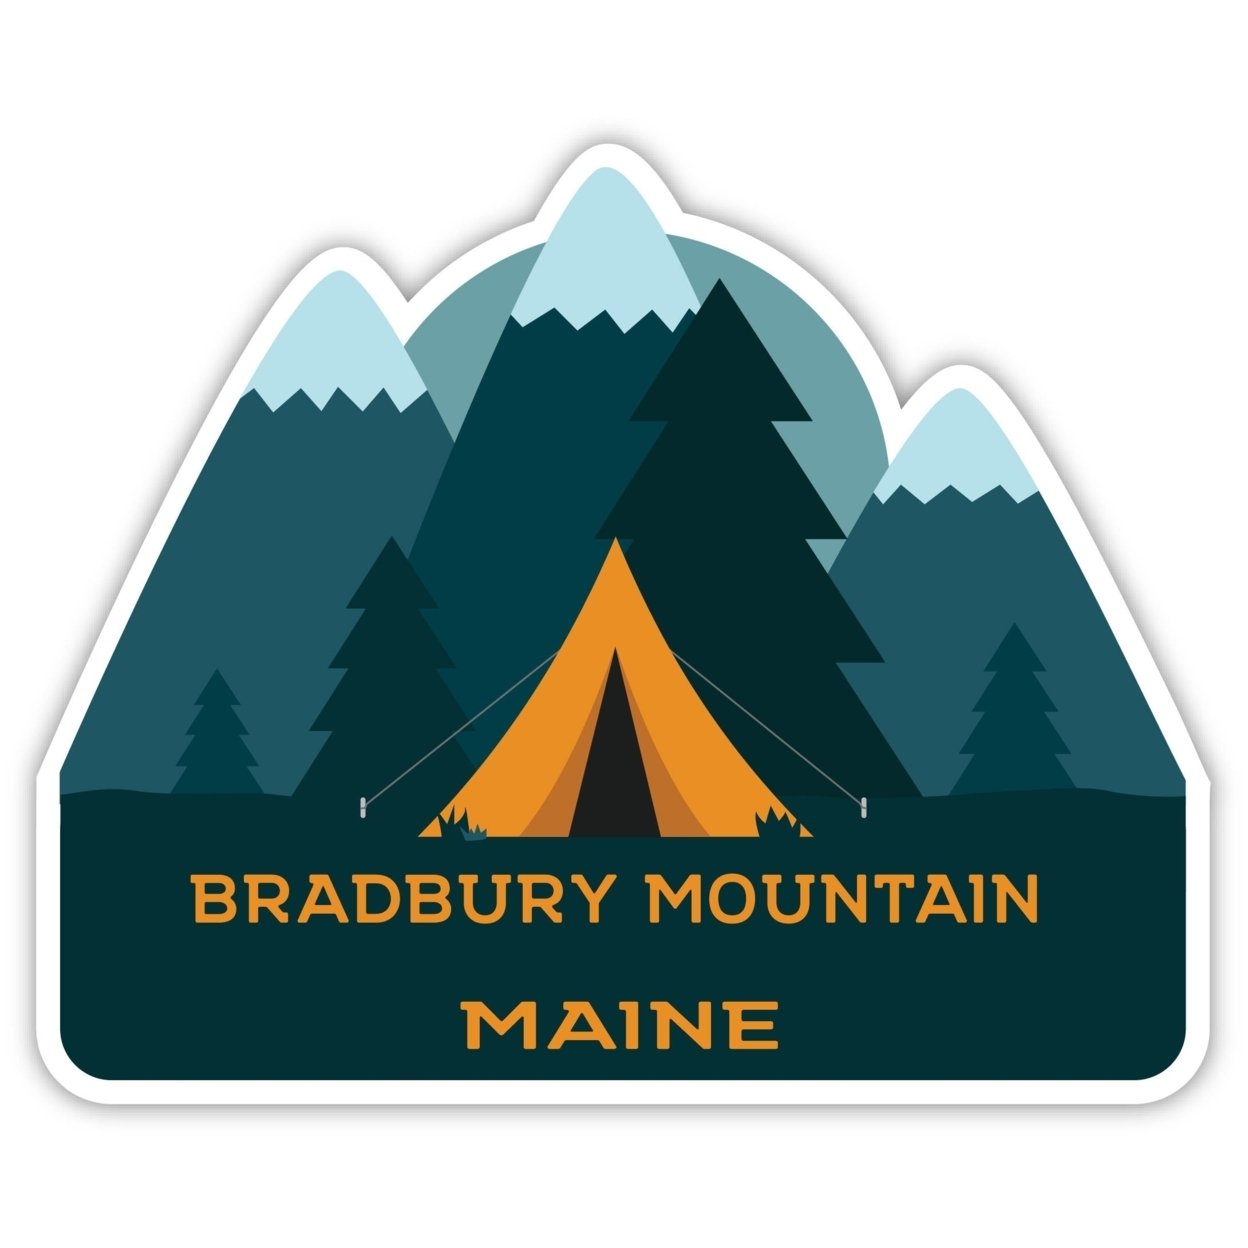 Bradbury Mountain Maine Souvenir Decorative Stickers (Choose Theme And Size) - 4-Pack, 4-Inch, Tent